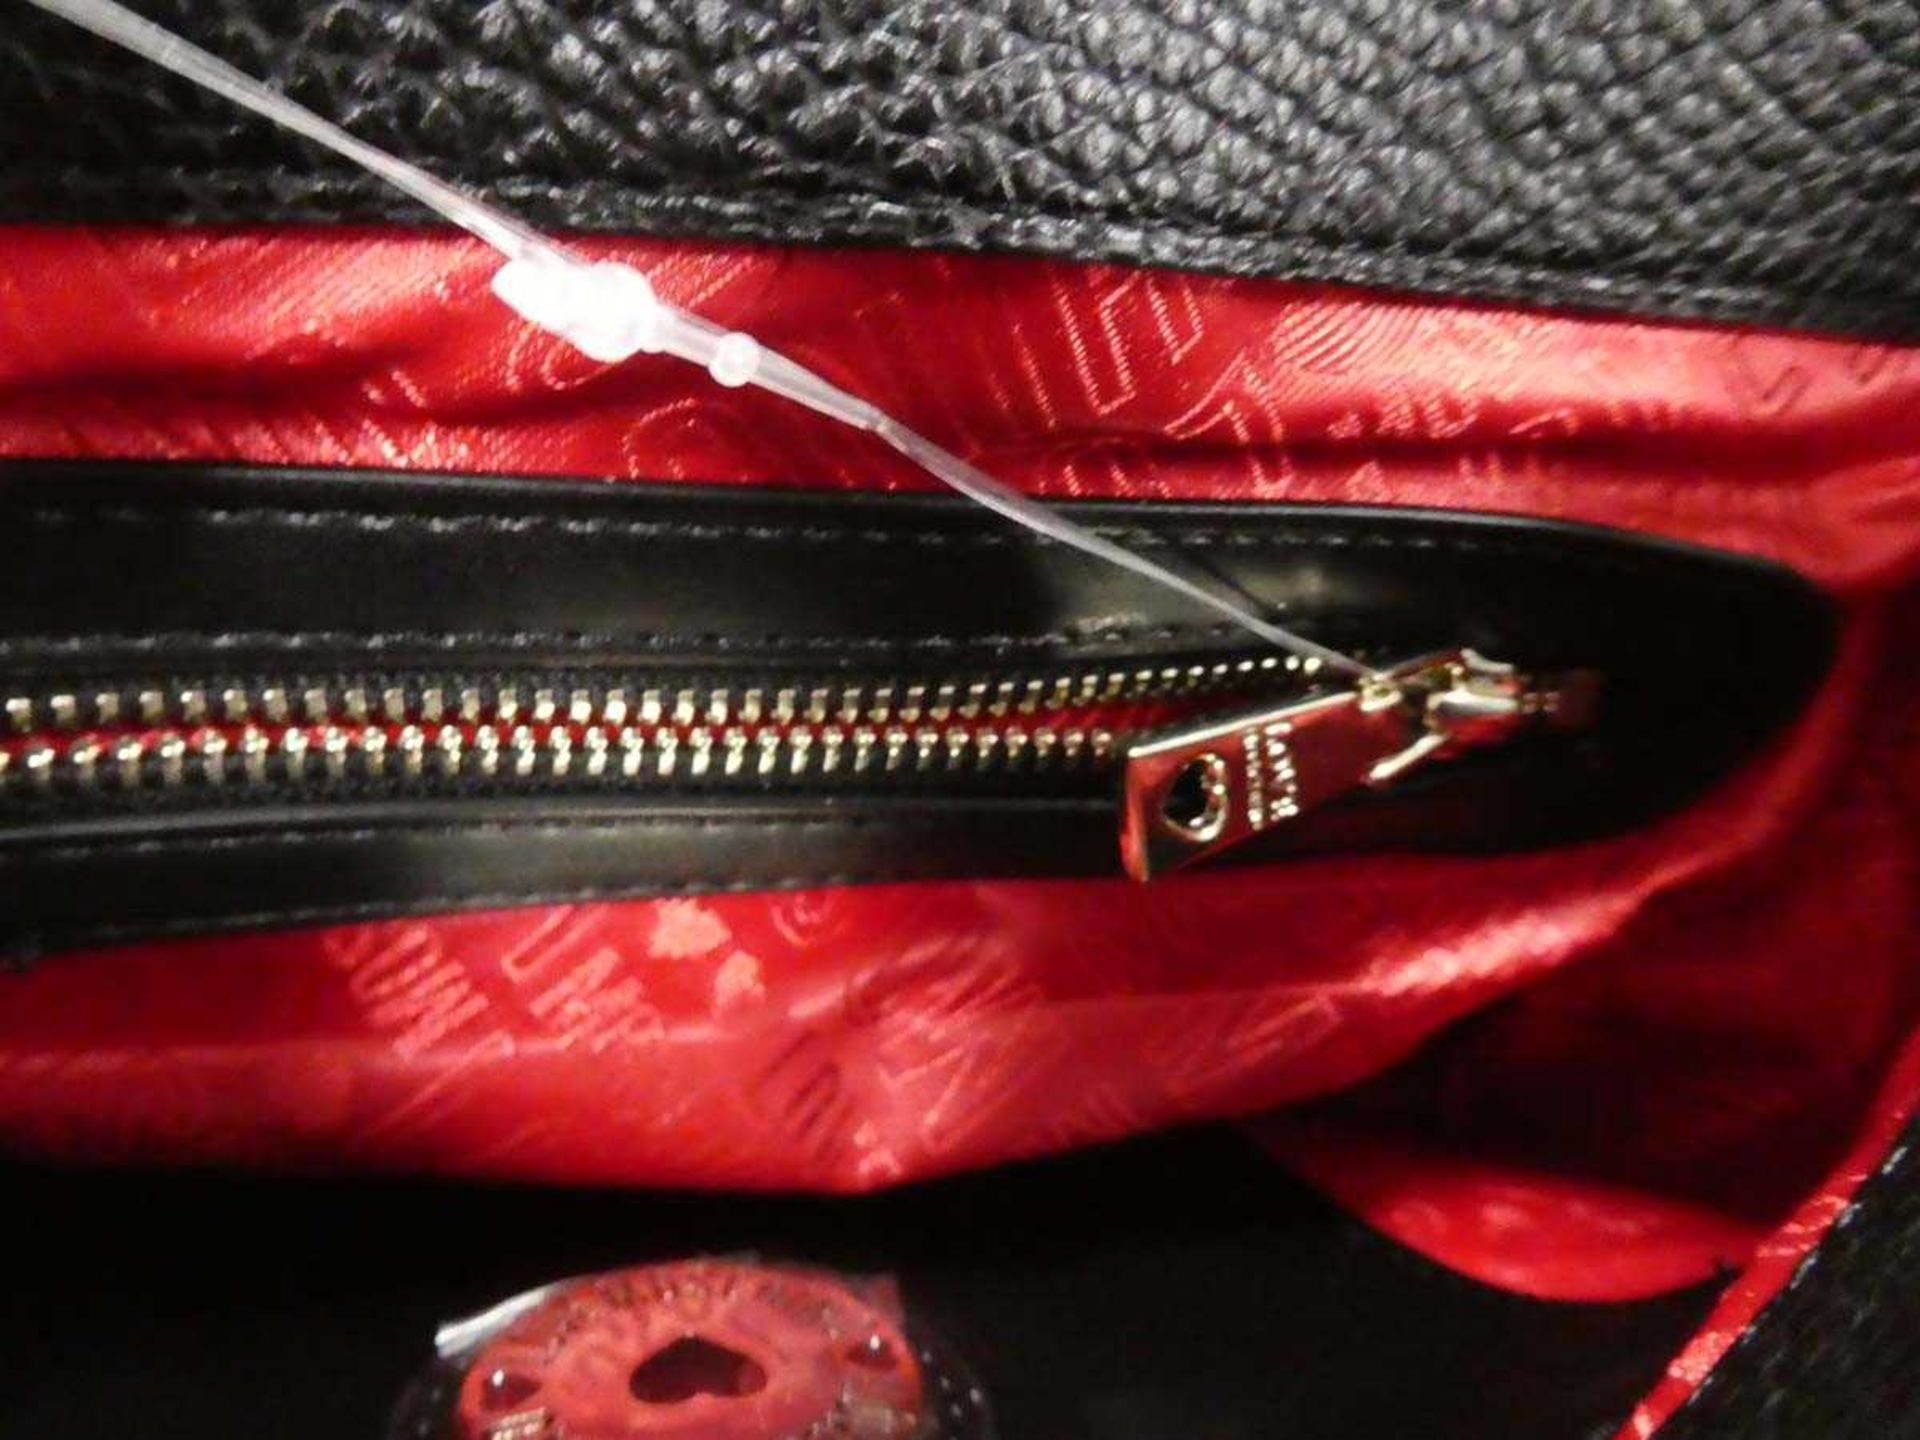 +VAT Moschino Borsa Pu St Croco crossbody bag with dustbag - Image 2 of 2